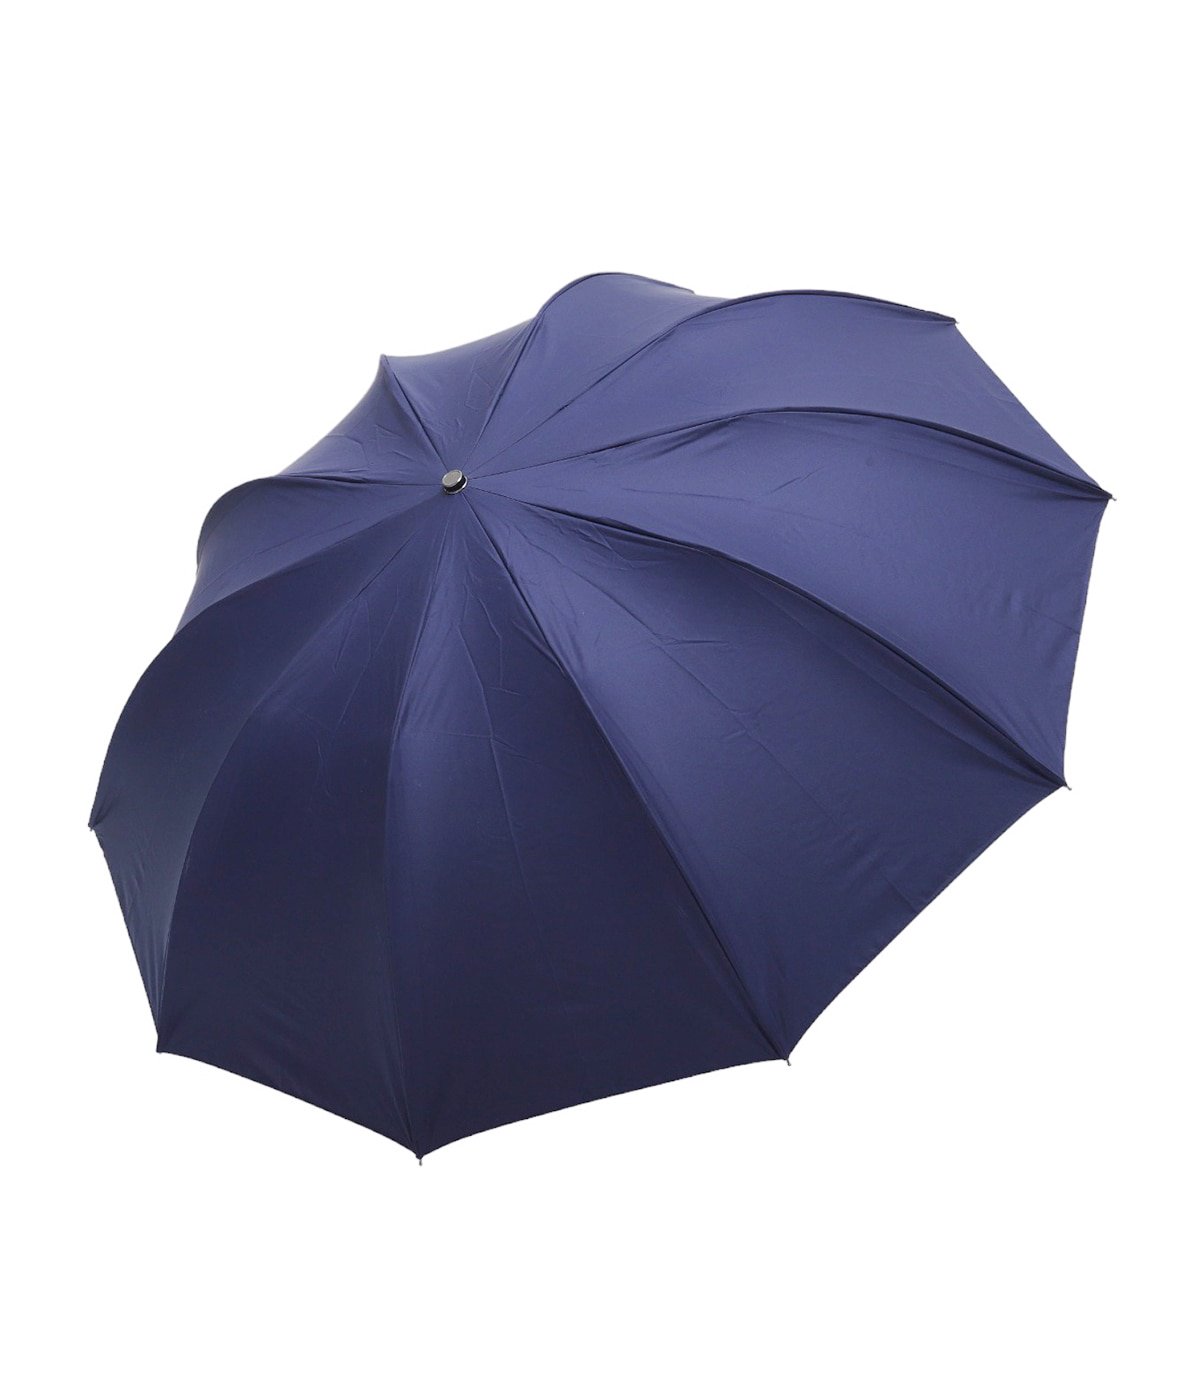 【ONLY ARK】別注 TELESCOPIC UMBLELLA-Maple Straight / 折りたたみ傘 晴雨兼用 遮光